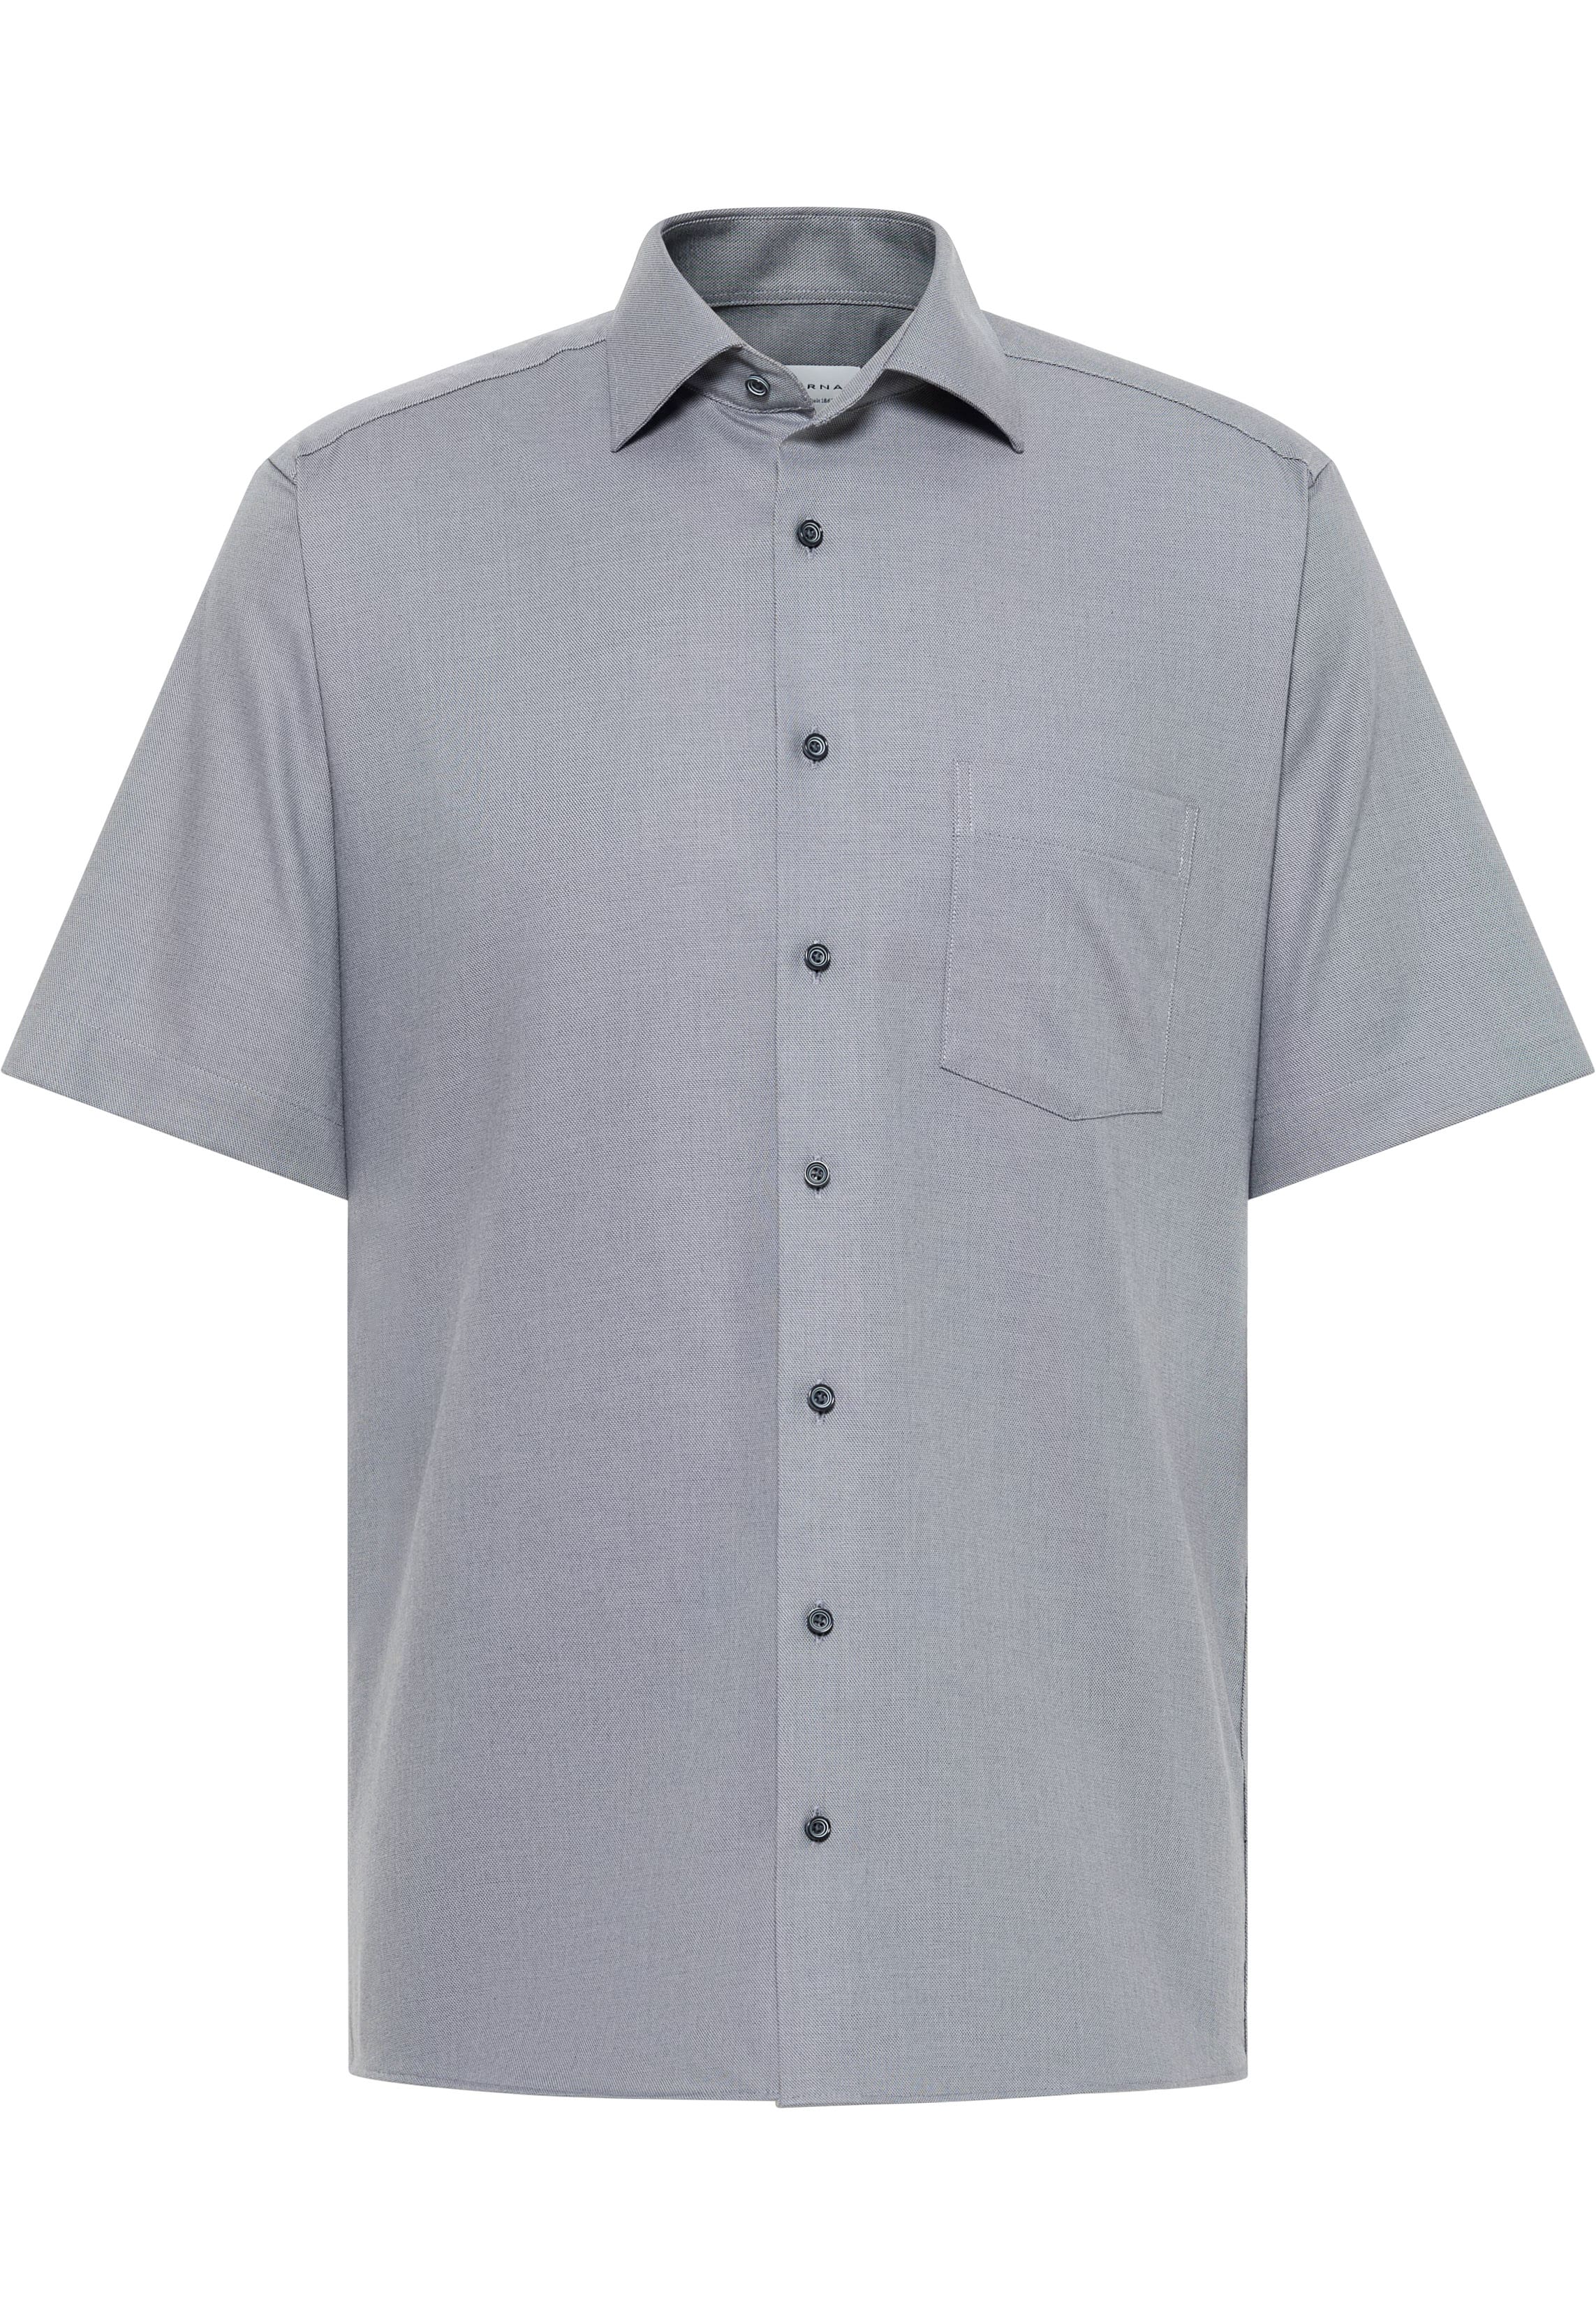 MODERN FIT Shirt in steel grey structured